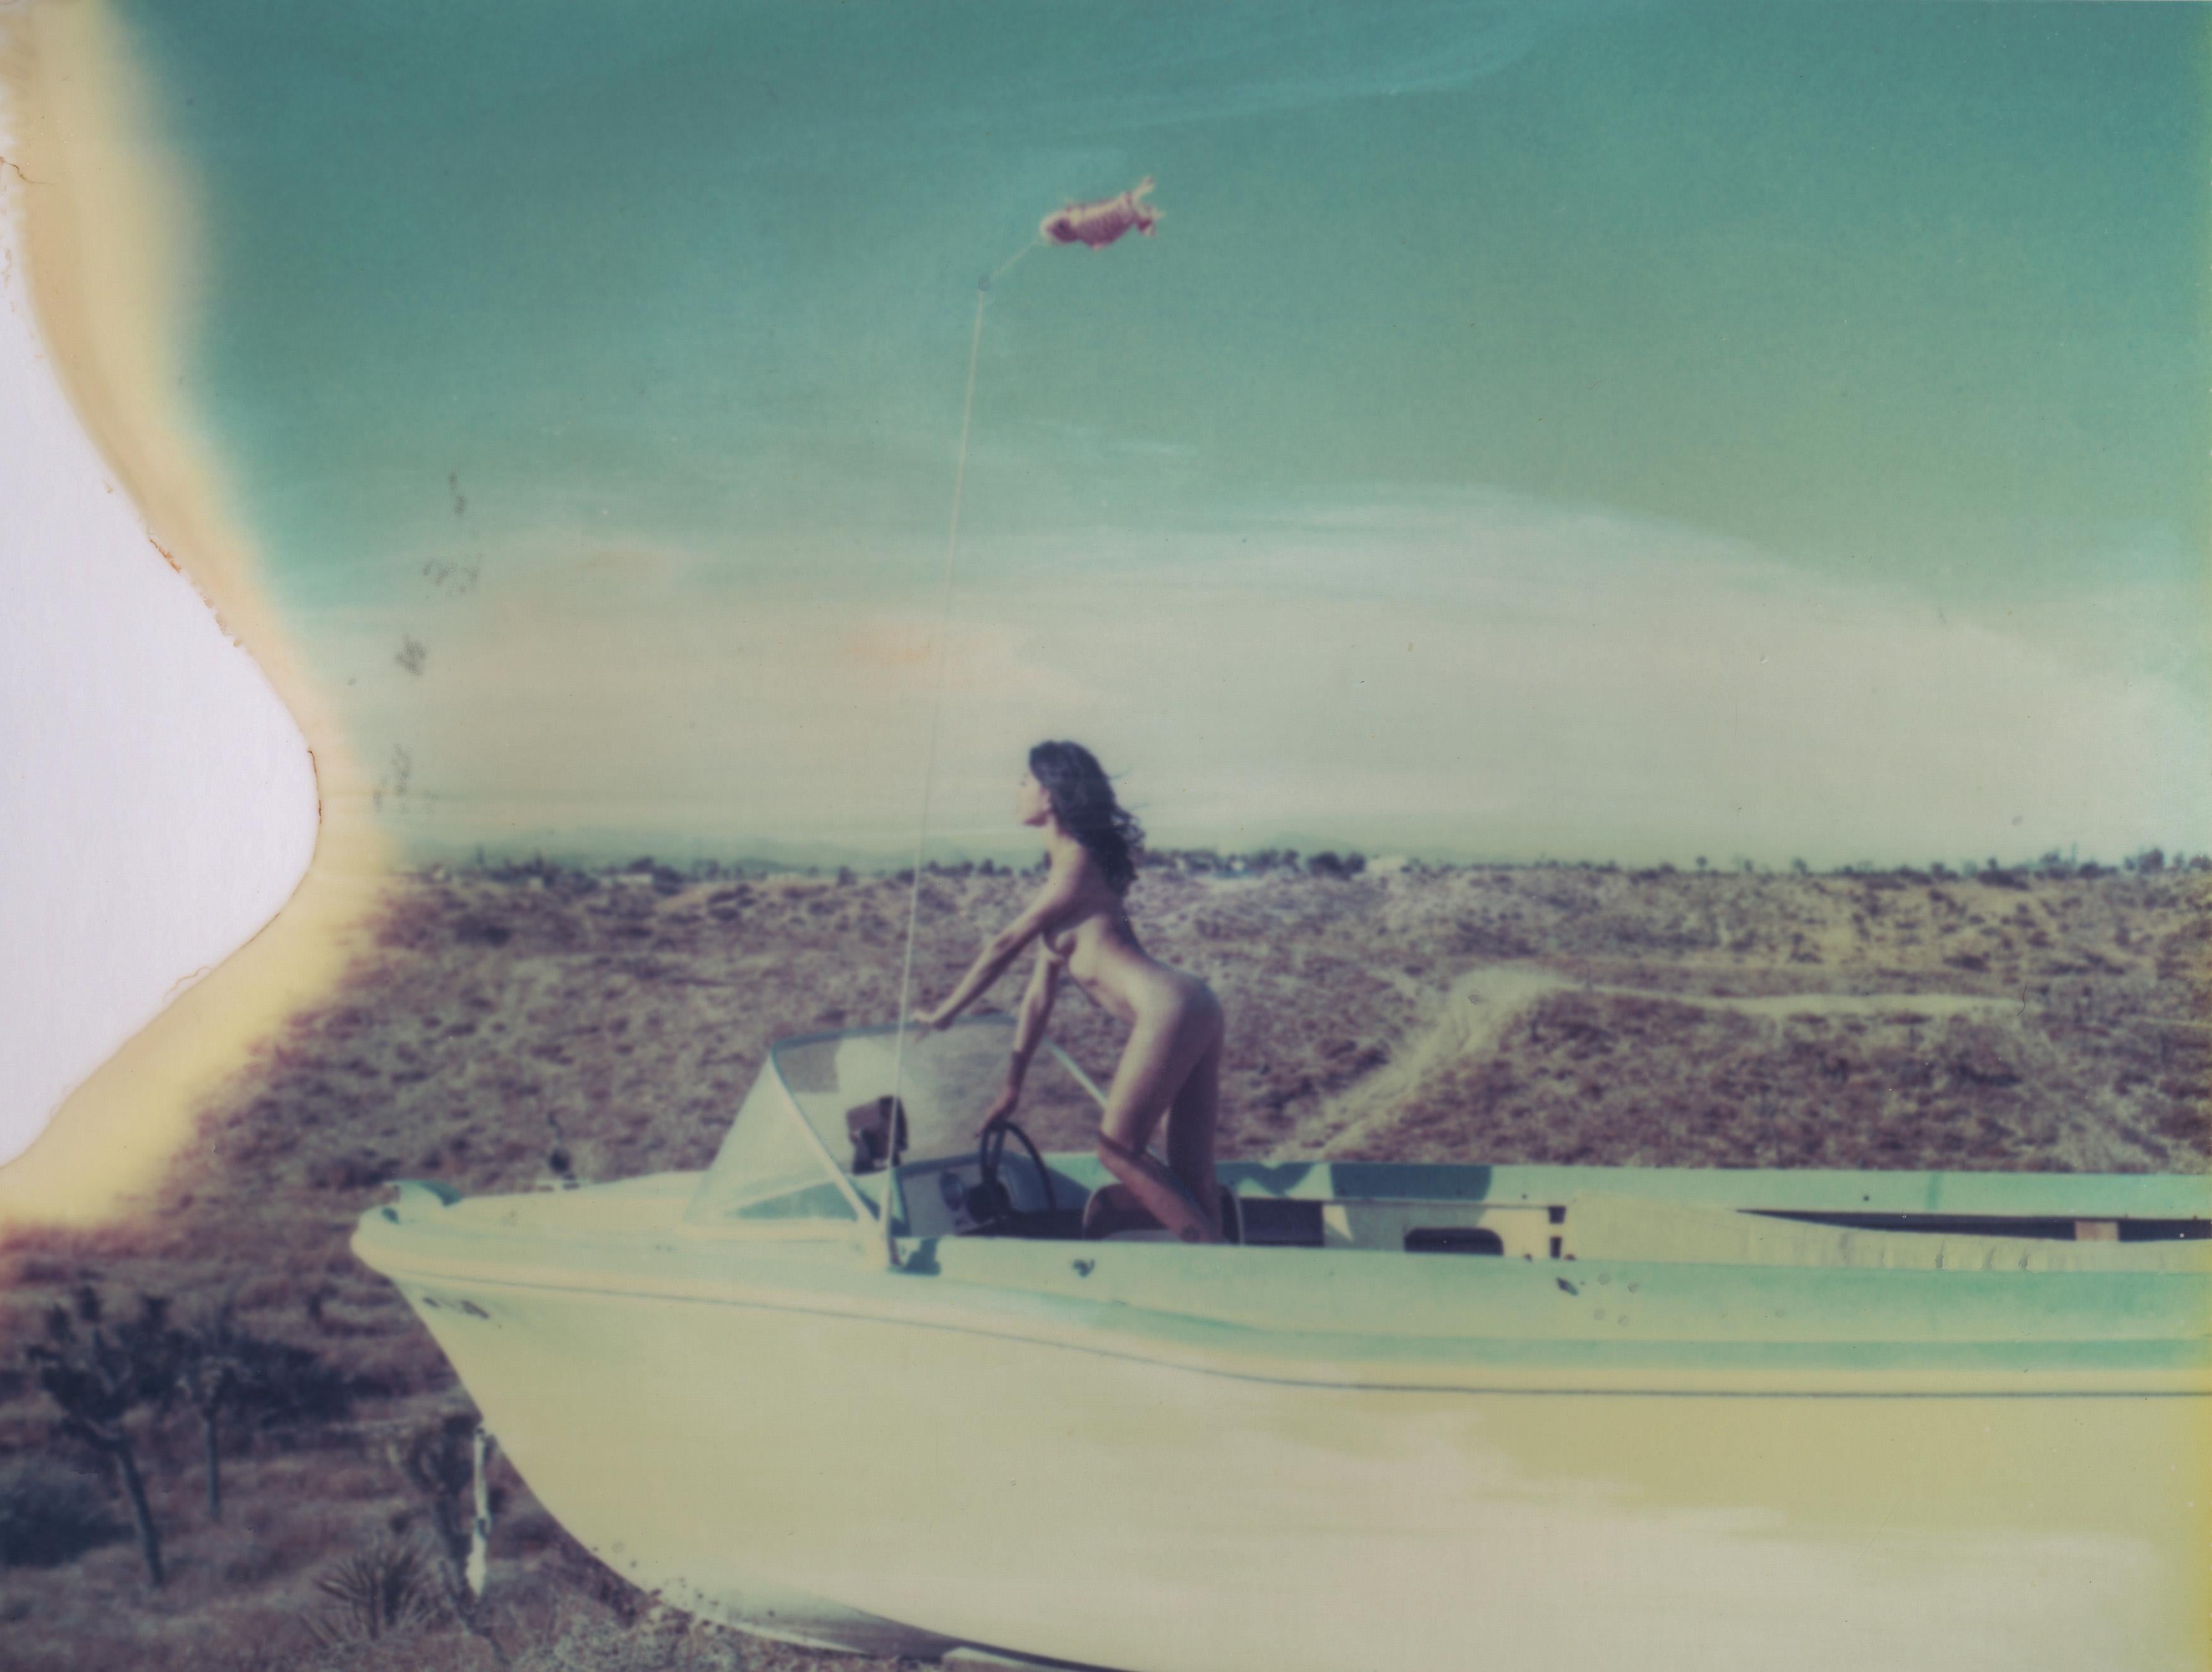 Kirsten Thys van den Audenaerde Color Photograph - Desert Escape - Contemporary, Polaroid, Nude, Landscape, 21st Century